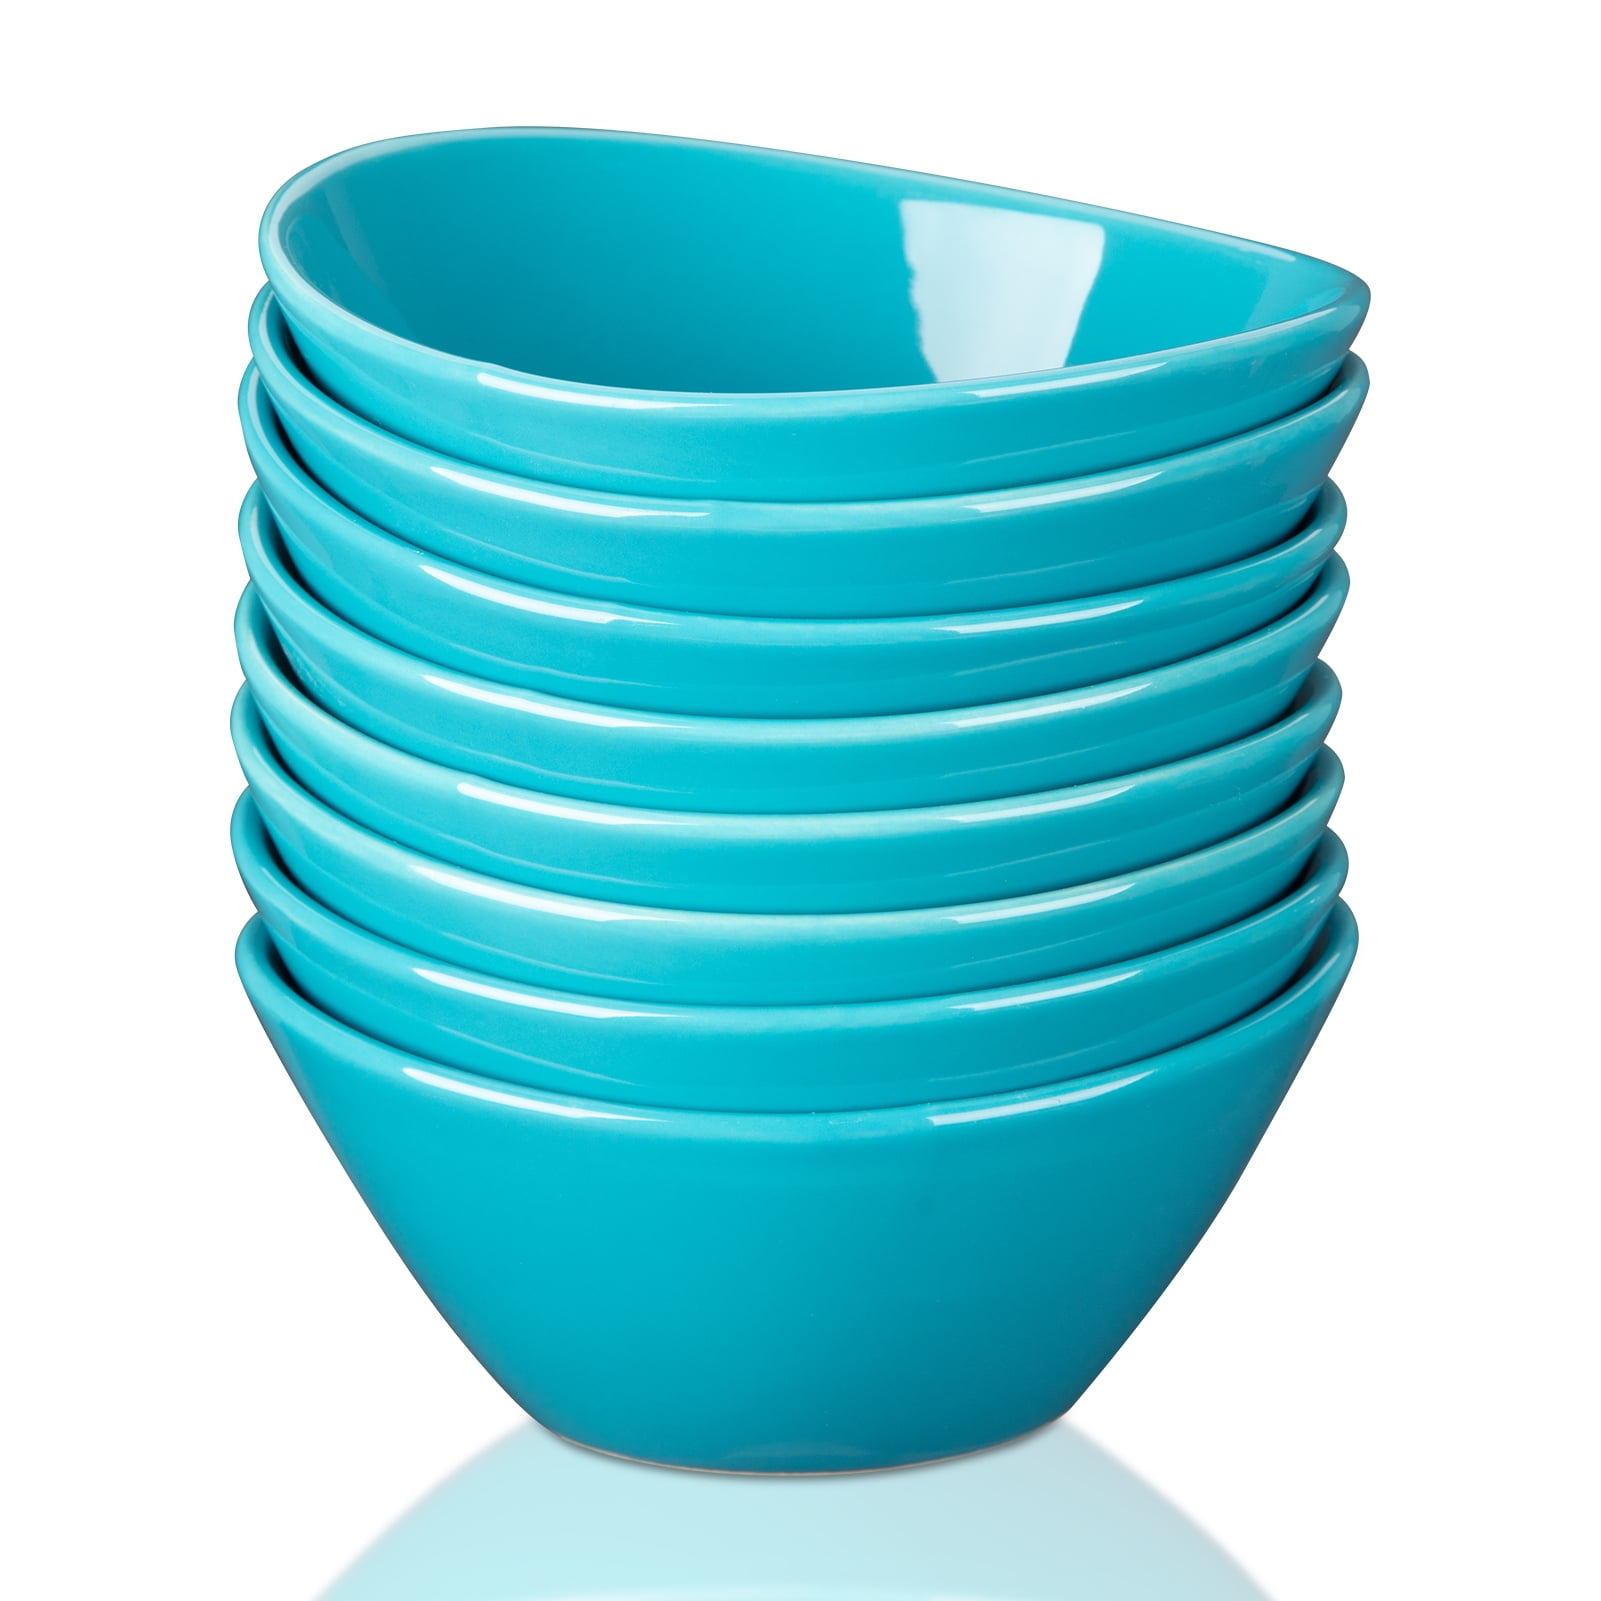 Details about   Double Color Plastic Melamine Bowl Set Home And Restaurant Tableware Accessories 